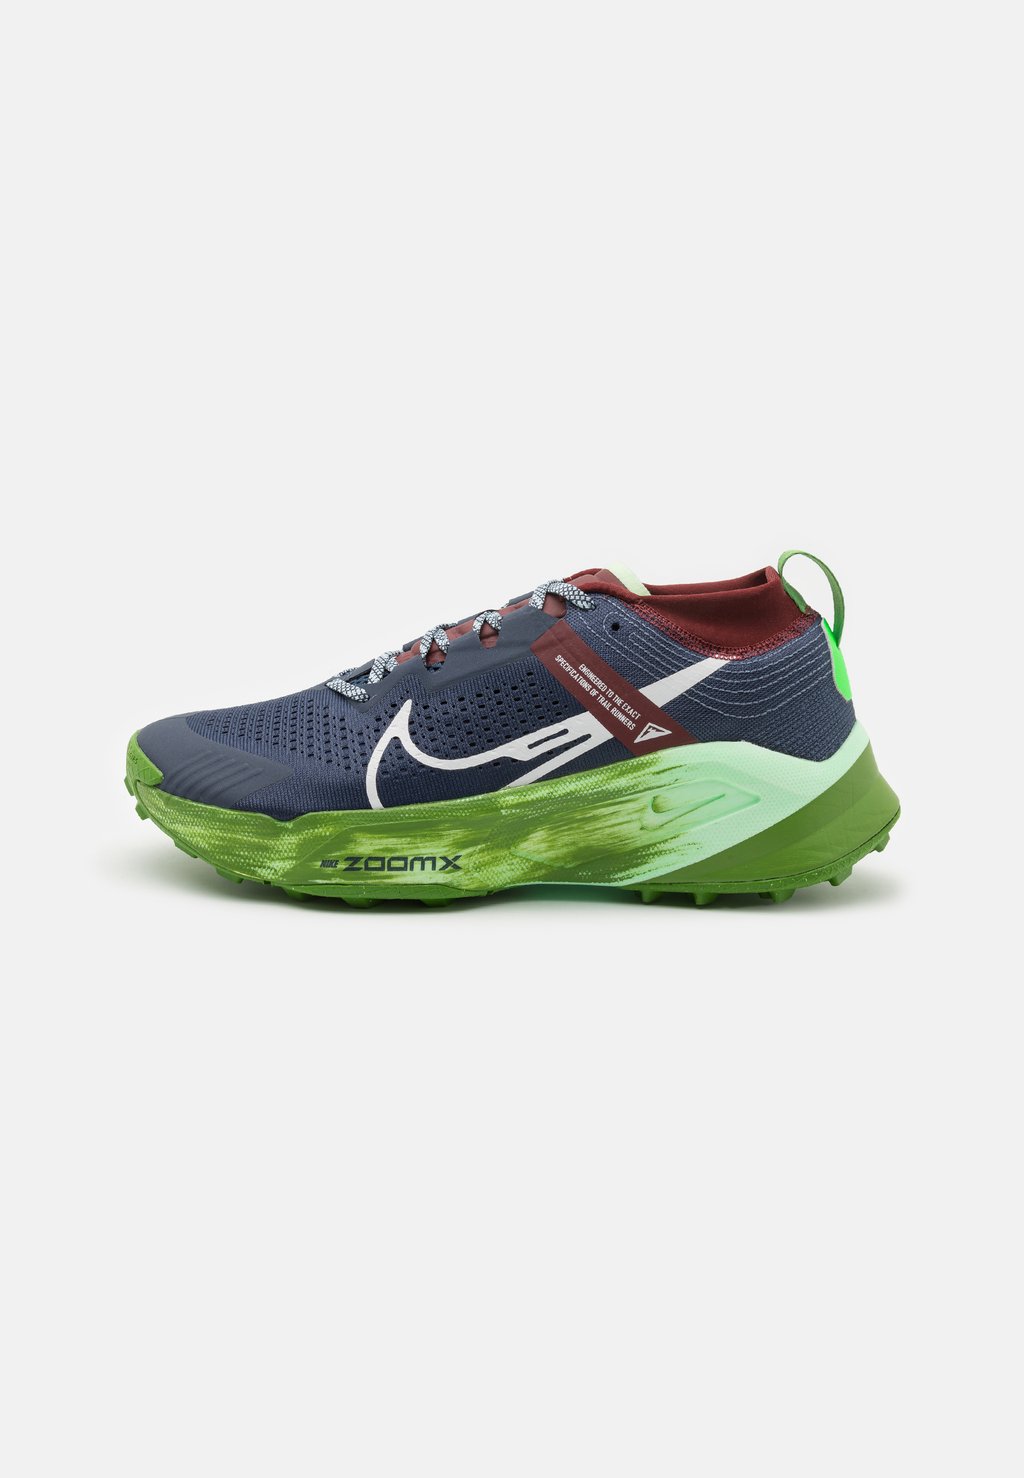 Кроссовки для бега по пересеченной местности Zoomx Zegama Nike, цвет thunder blue/summit white/chlorophyll/dark team red/vapor green